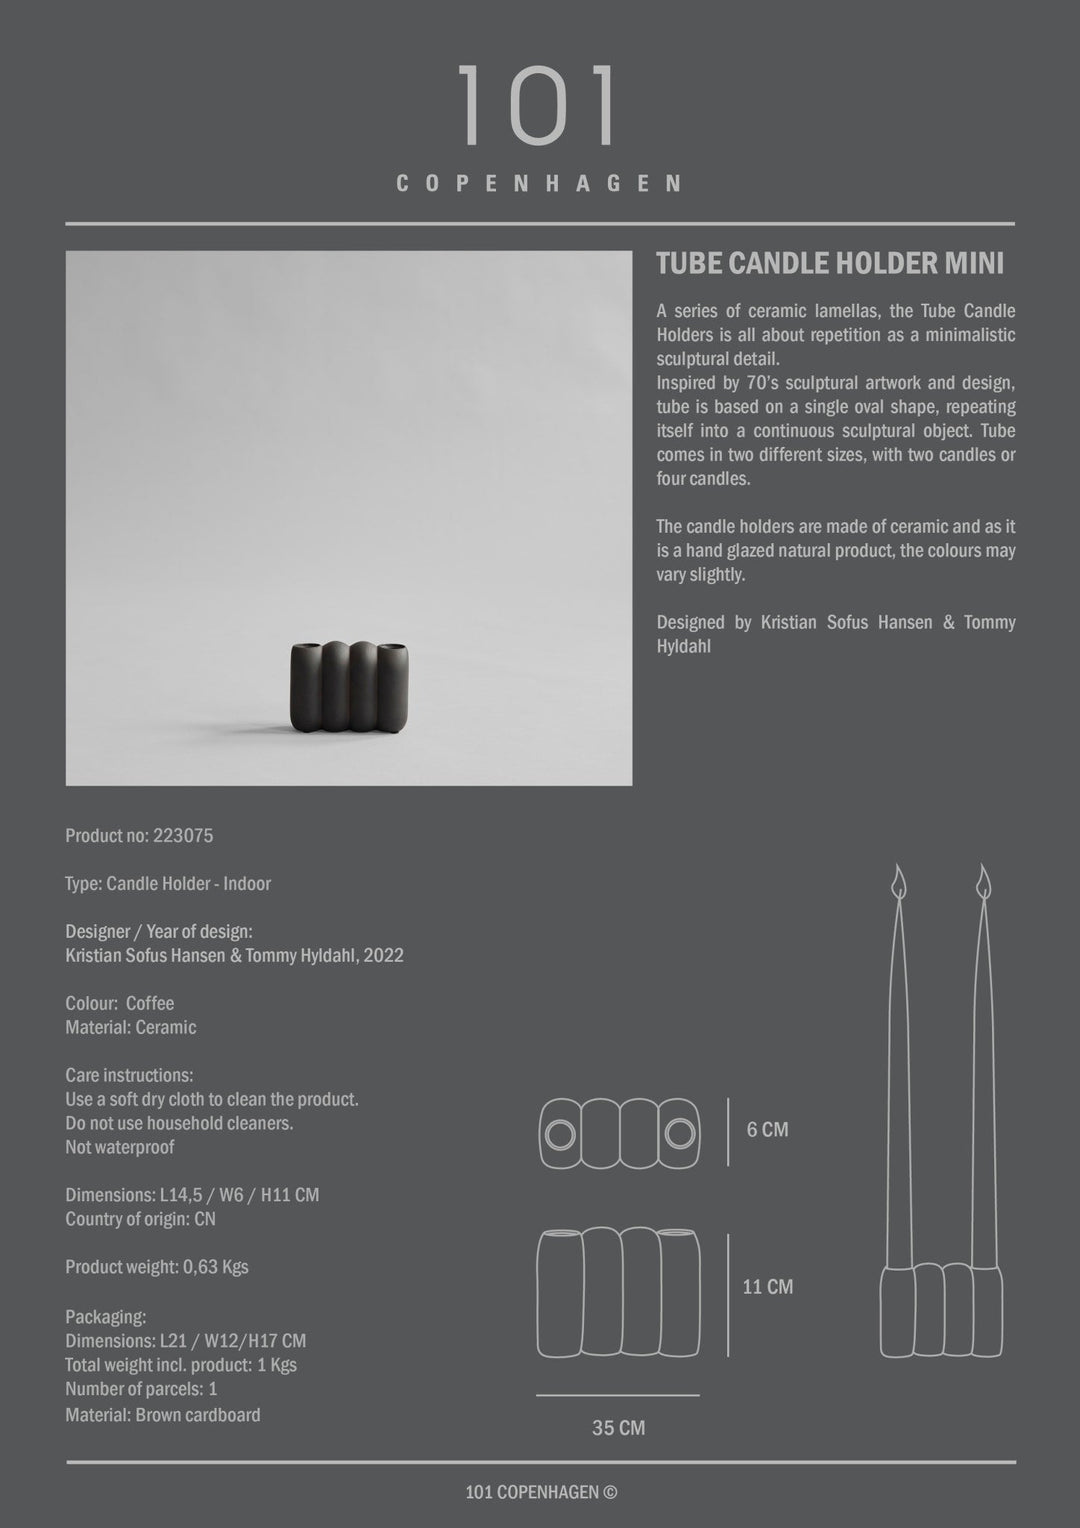 101 Copenhagen Tube Candle Holder - $55.00 - $115.00